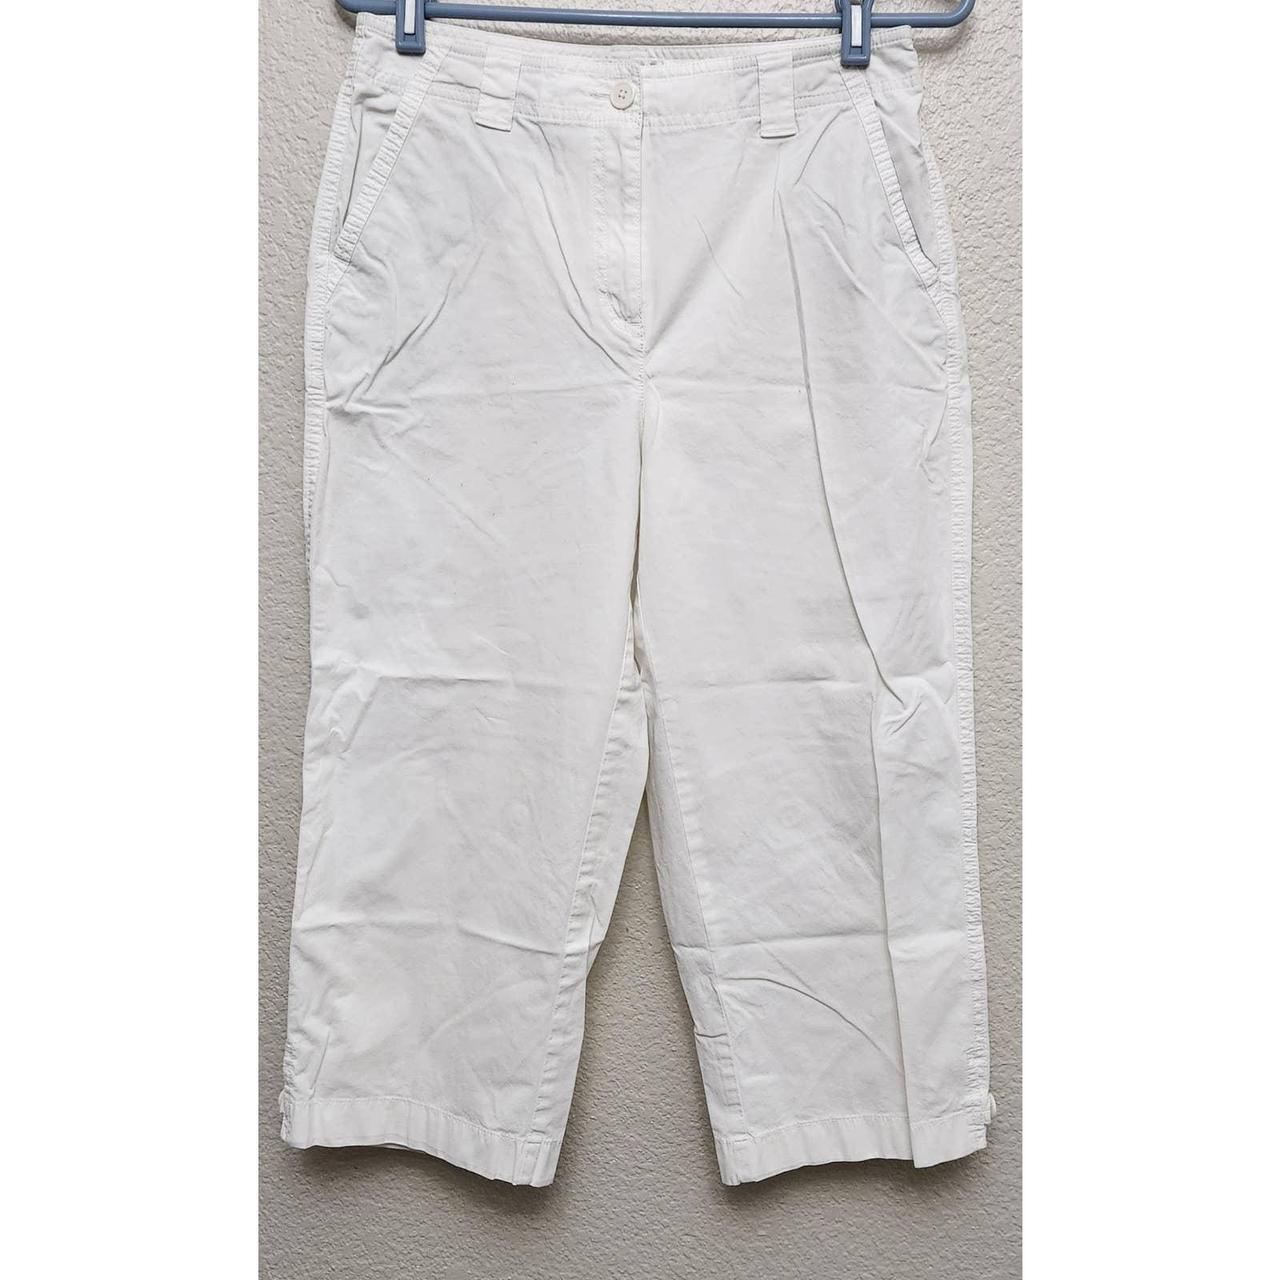 Boston Proper white lightweight cargo pants with... - Depop